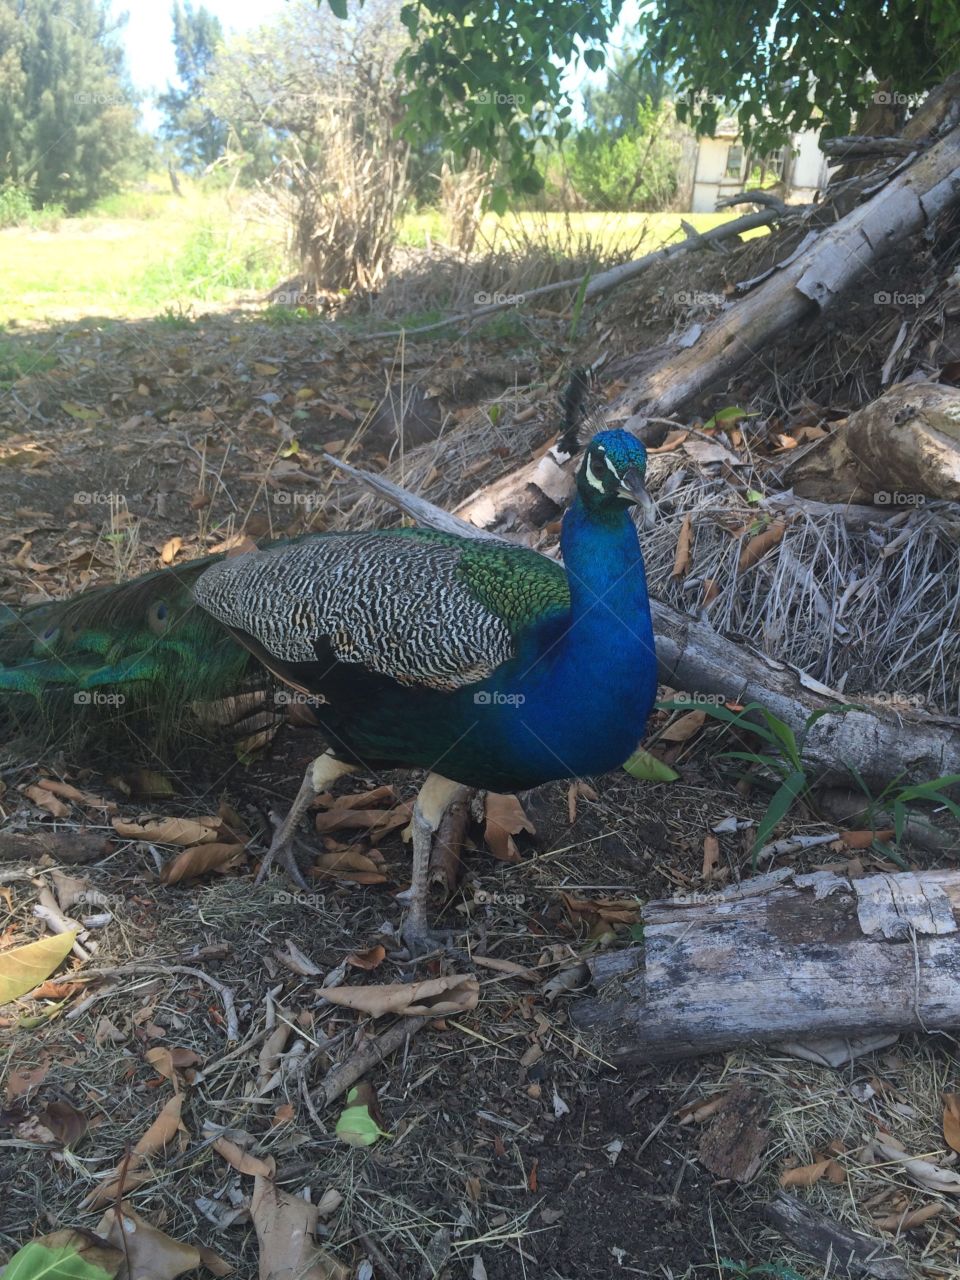 Shy peacock